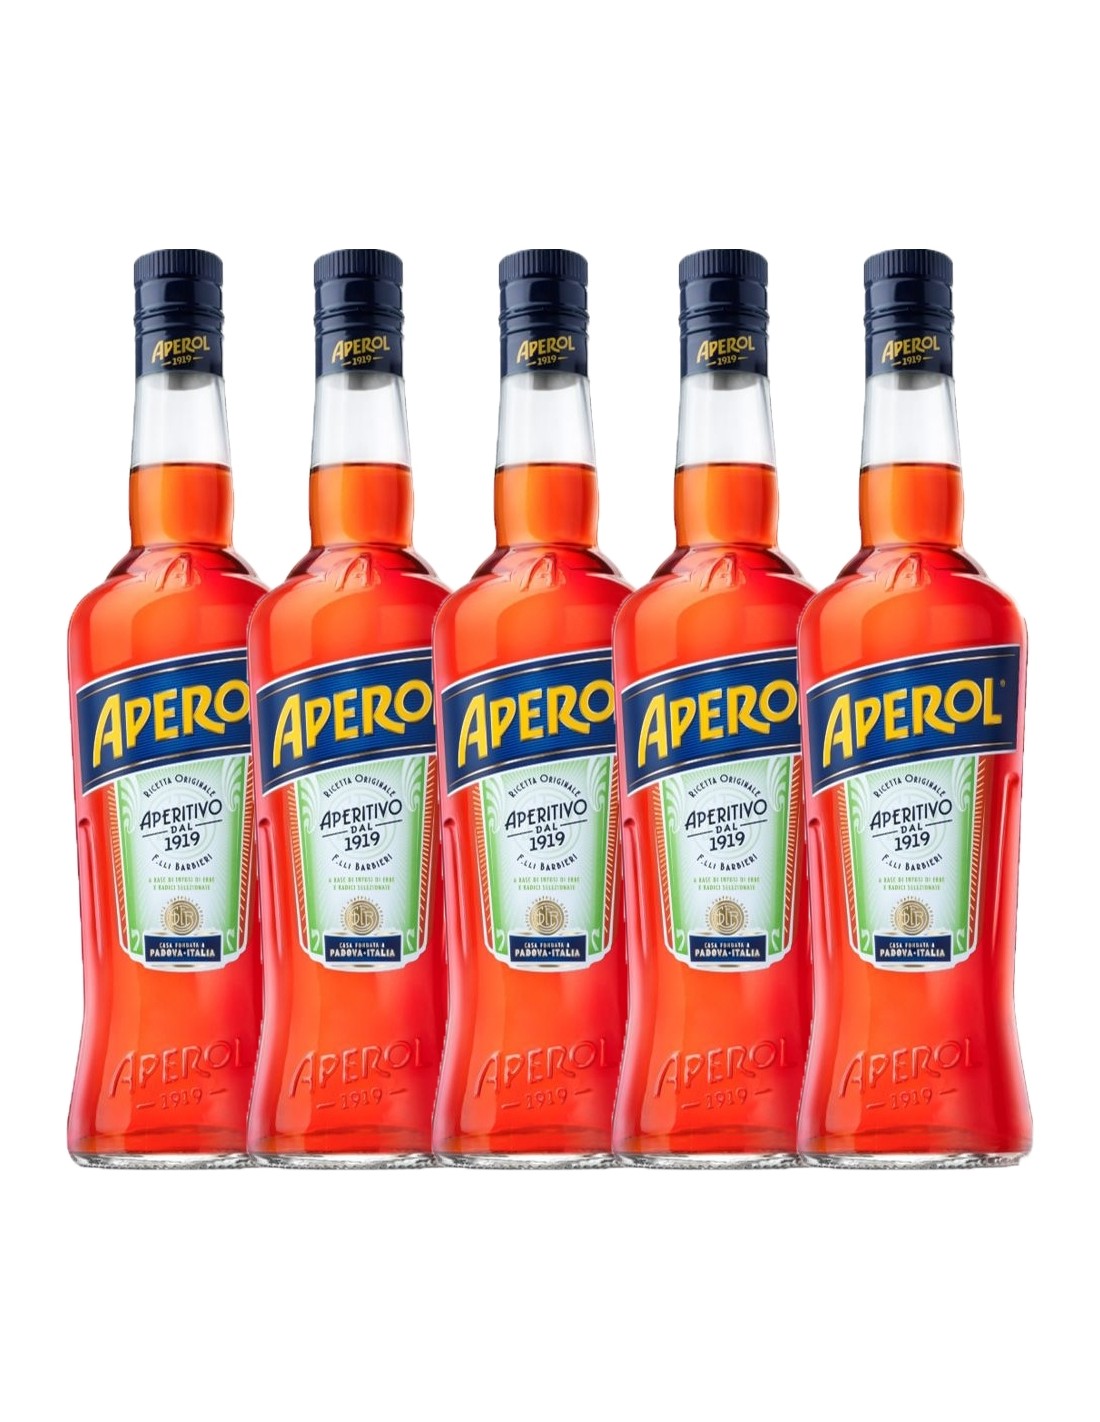 Pachet 5 sticle Aperitiv Aperol, 11% alc., 1L, Italia alcooldiscount.ro